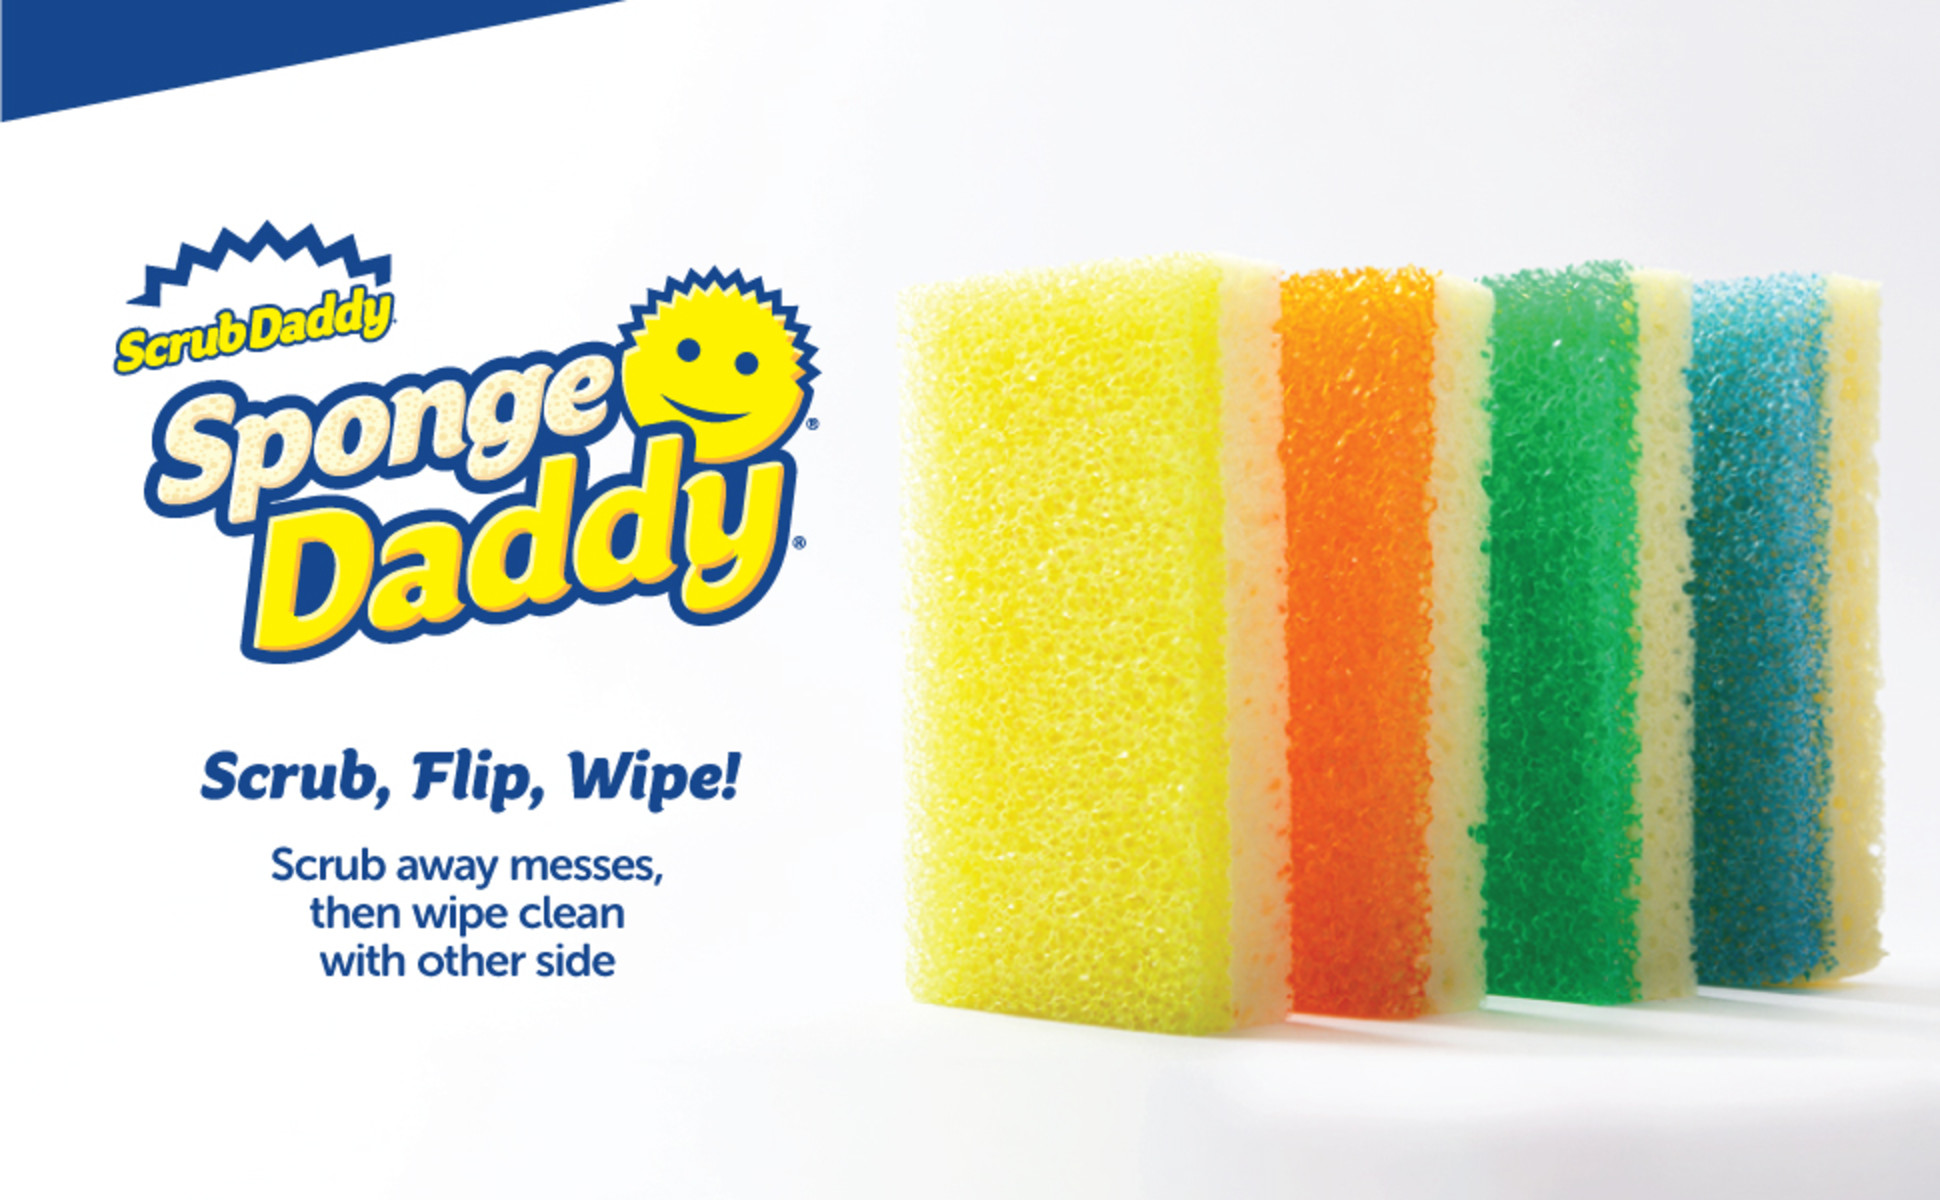 I tried four sponges including popular Scrub Daddy and Walmart